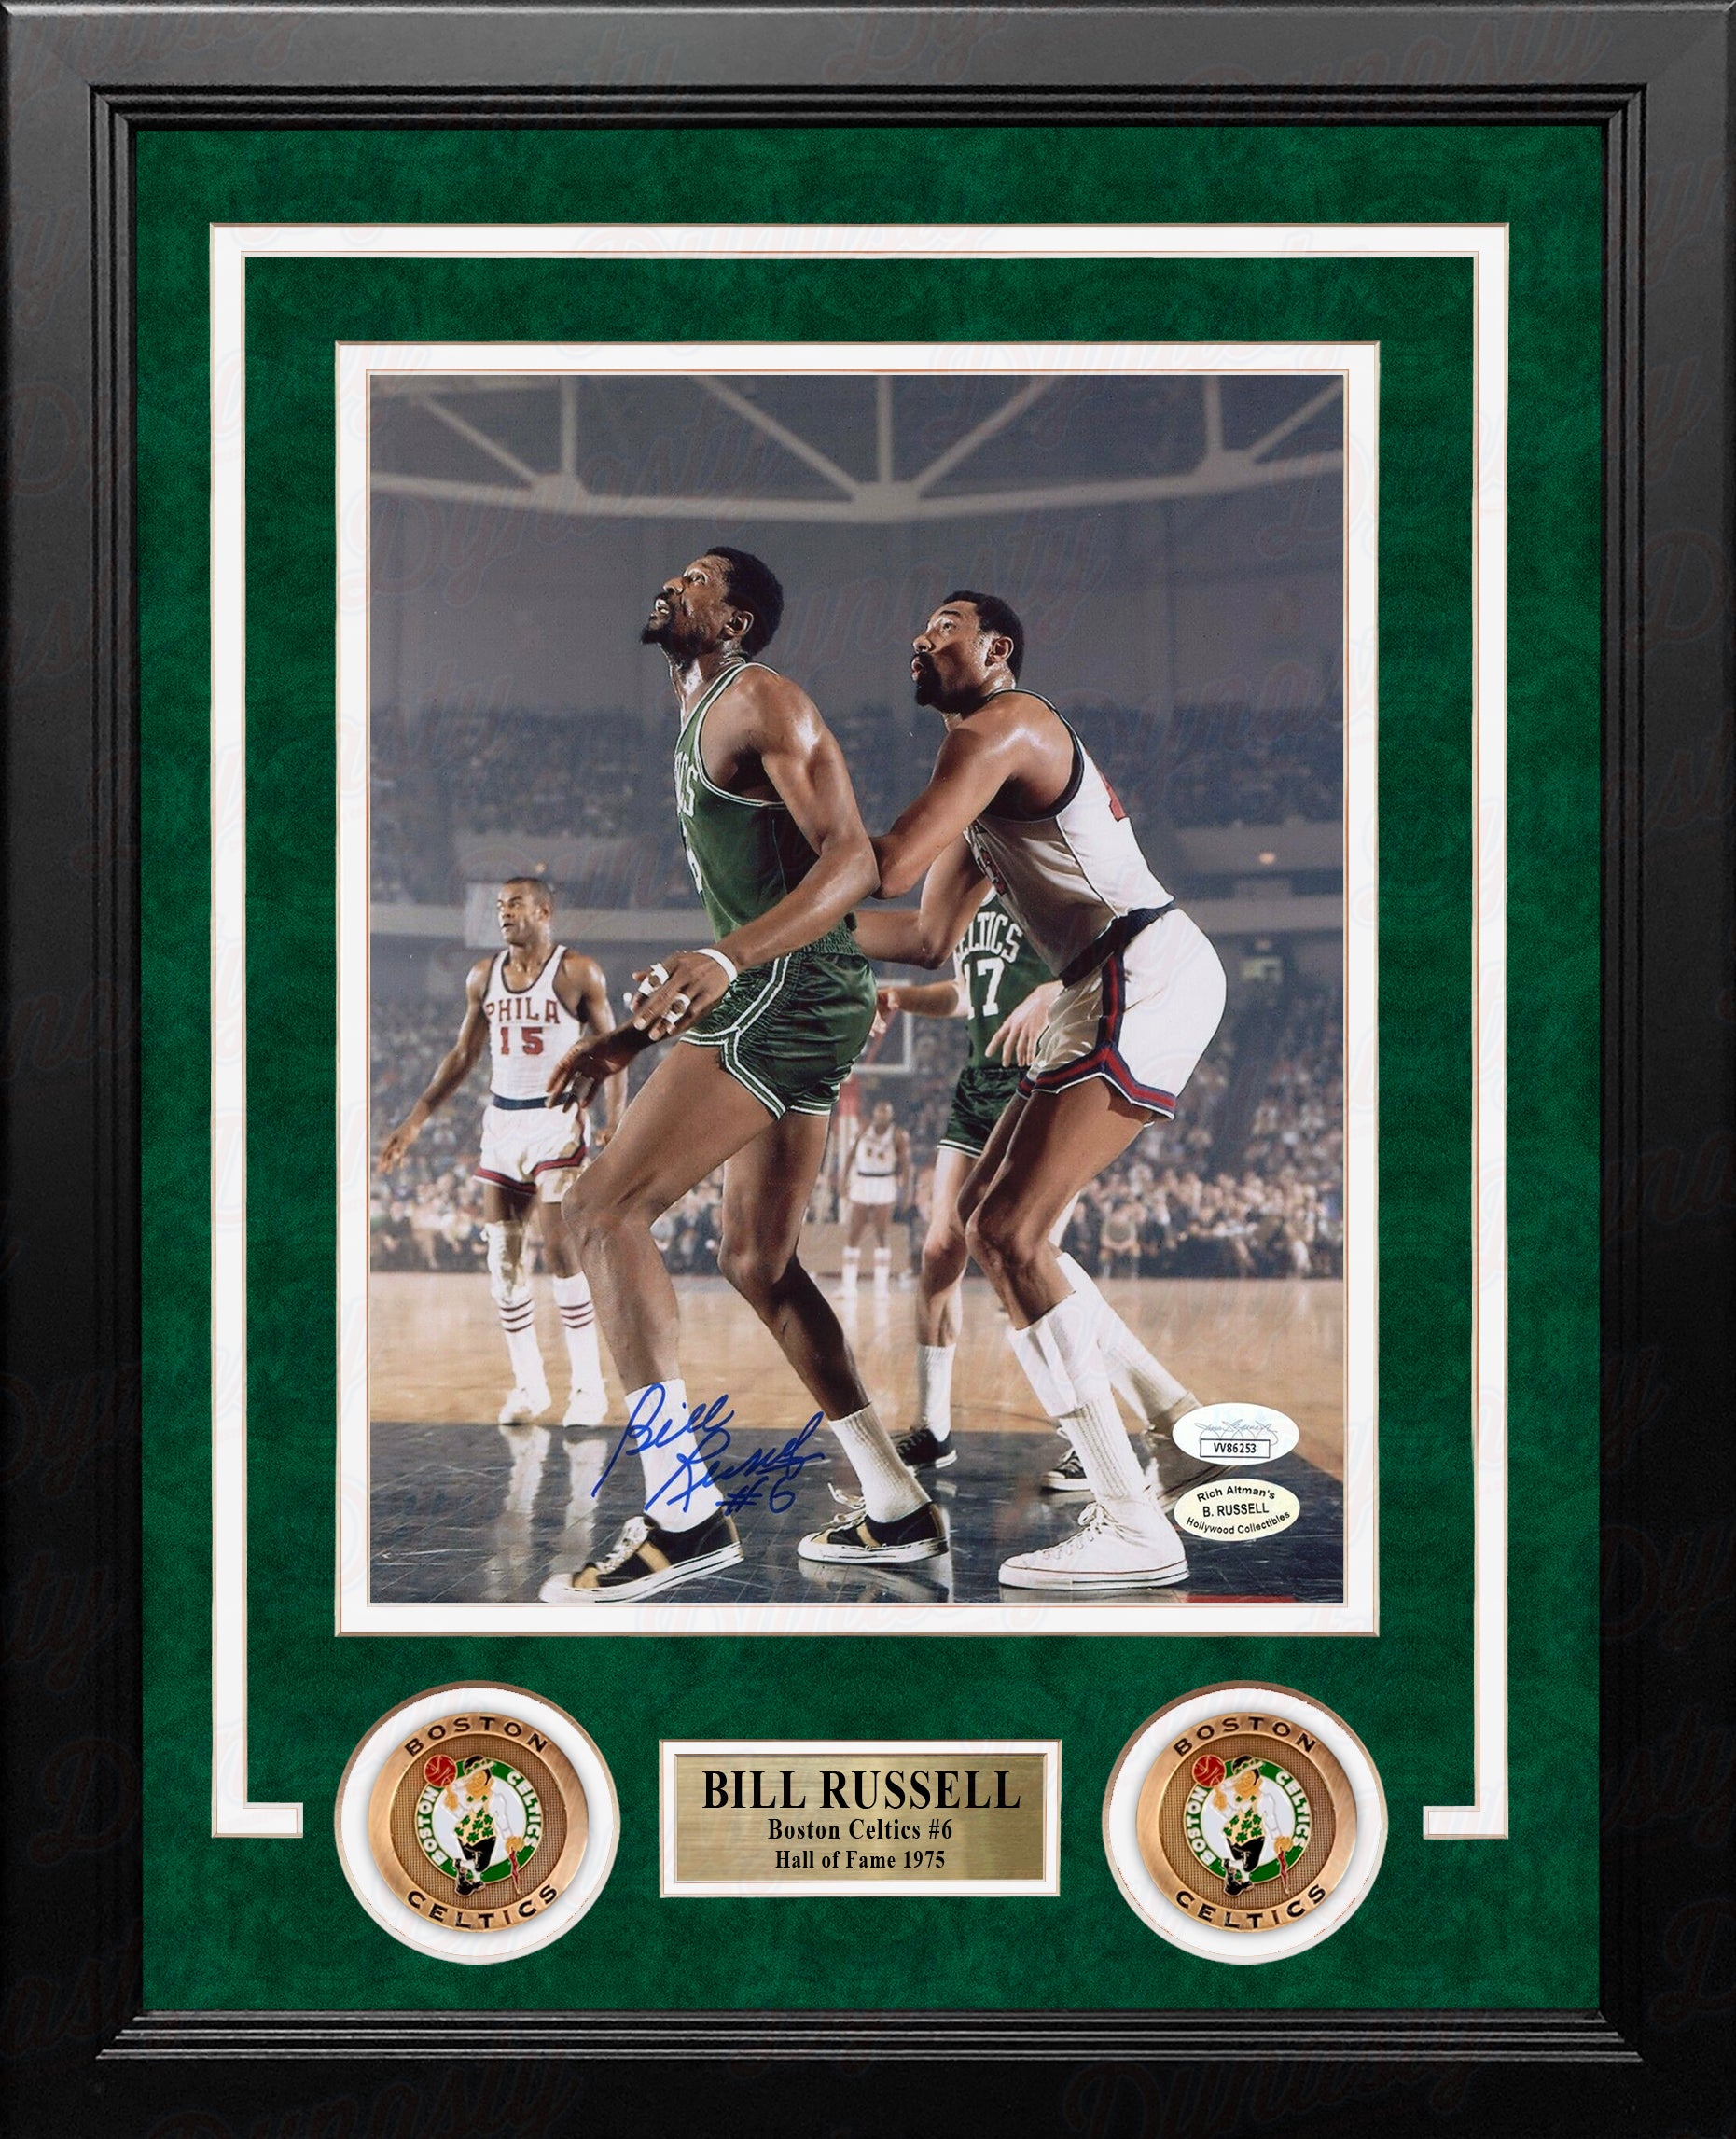 Bill Russell Boston Celtics TriStar Autographed Spalding Basketball with  11 World Championships Inscription